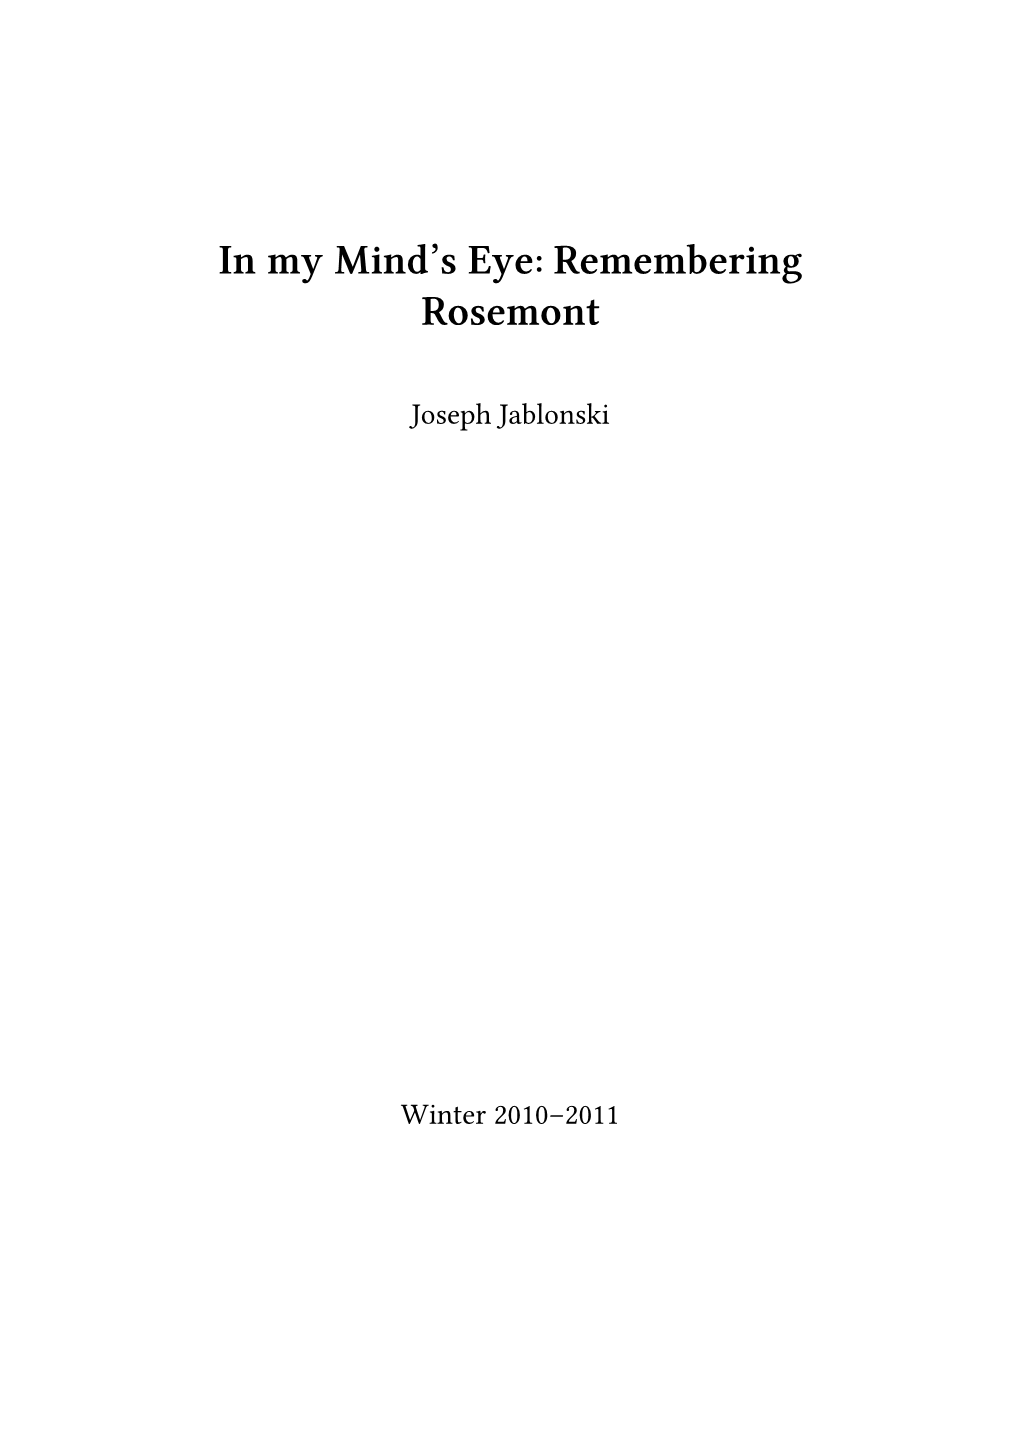 In My Mind's Eye: Remembering Rosemont